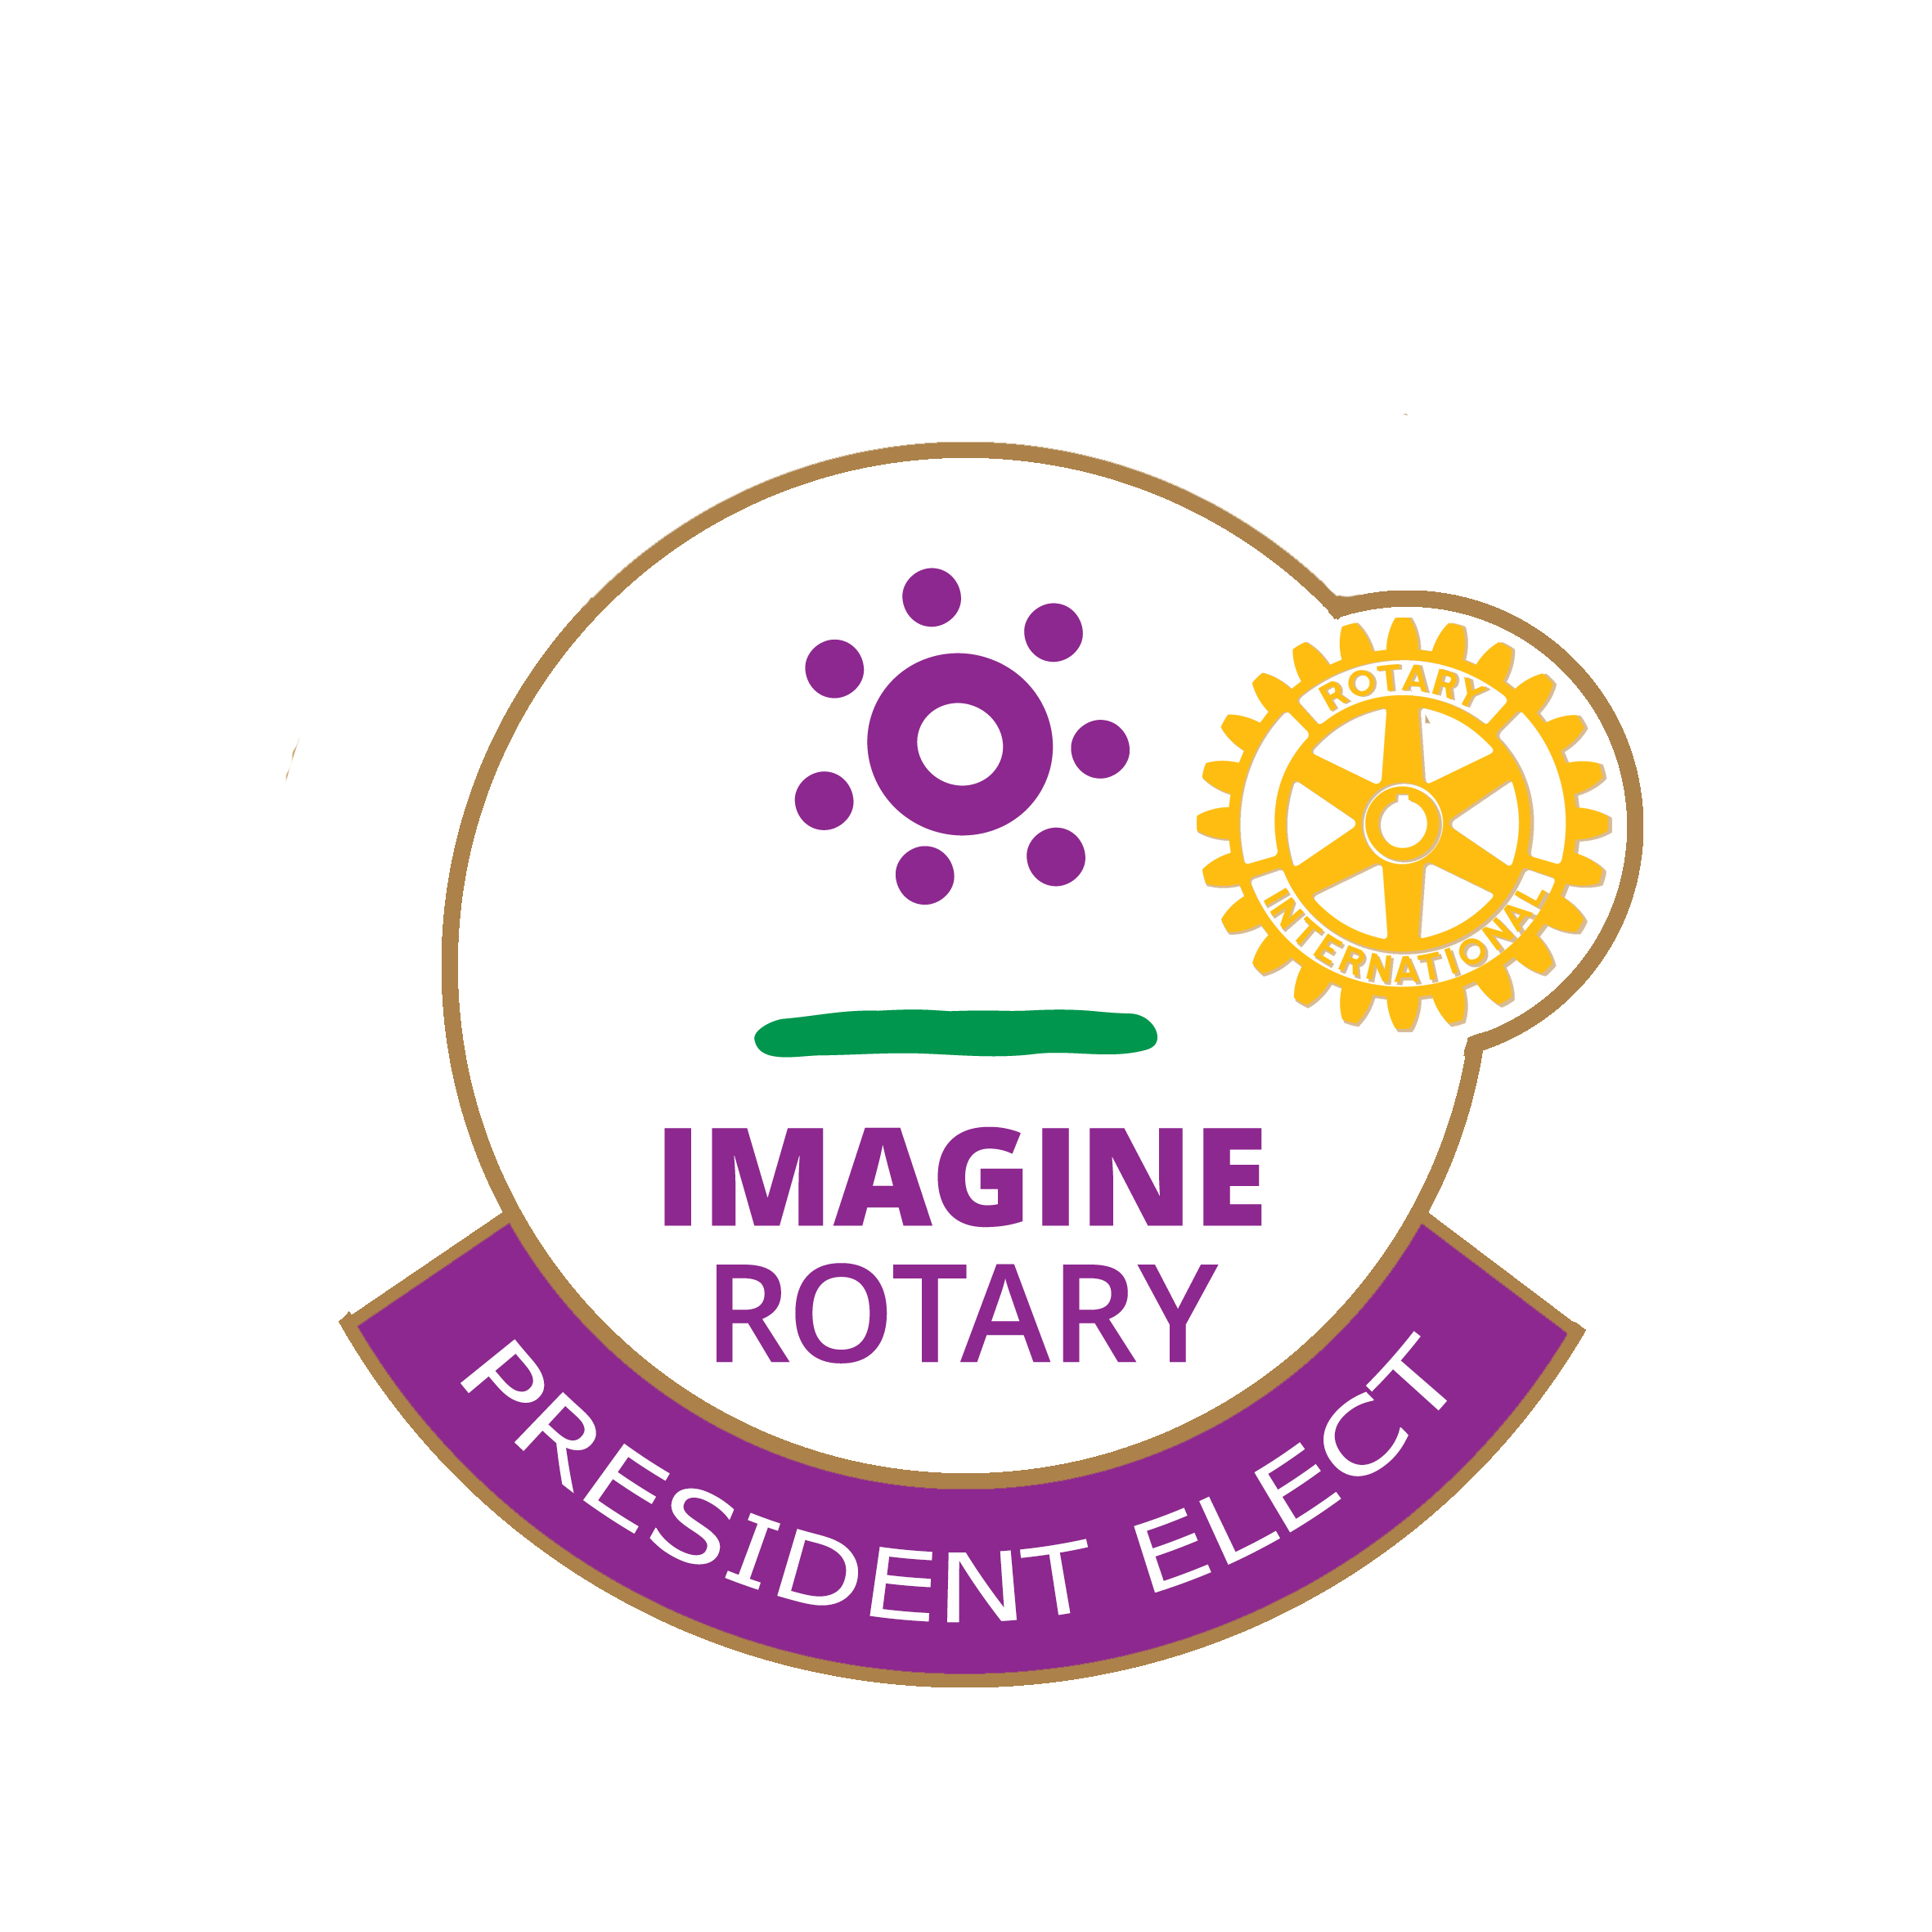 Motto 22/23 "President Elect" Pin